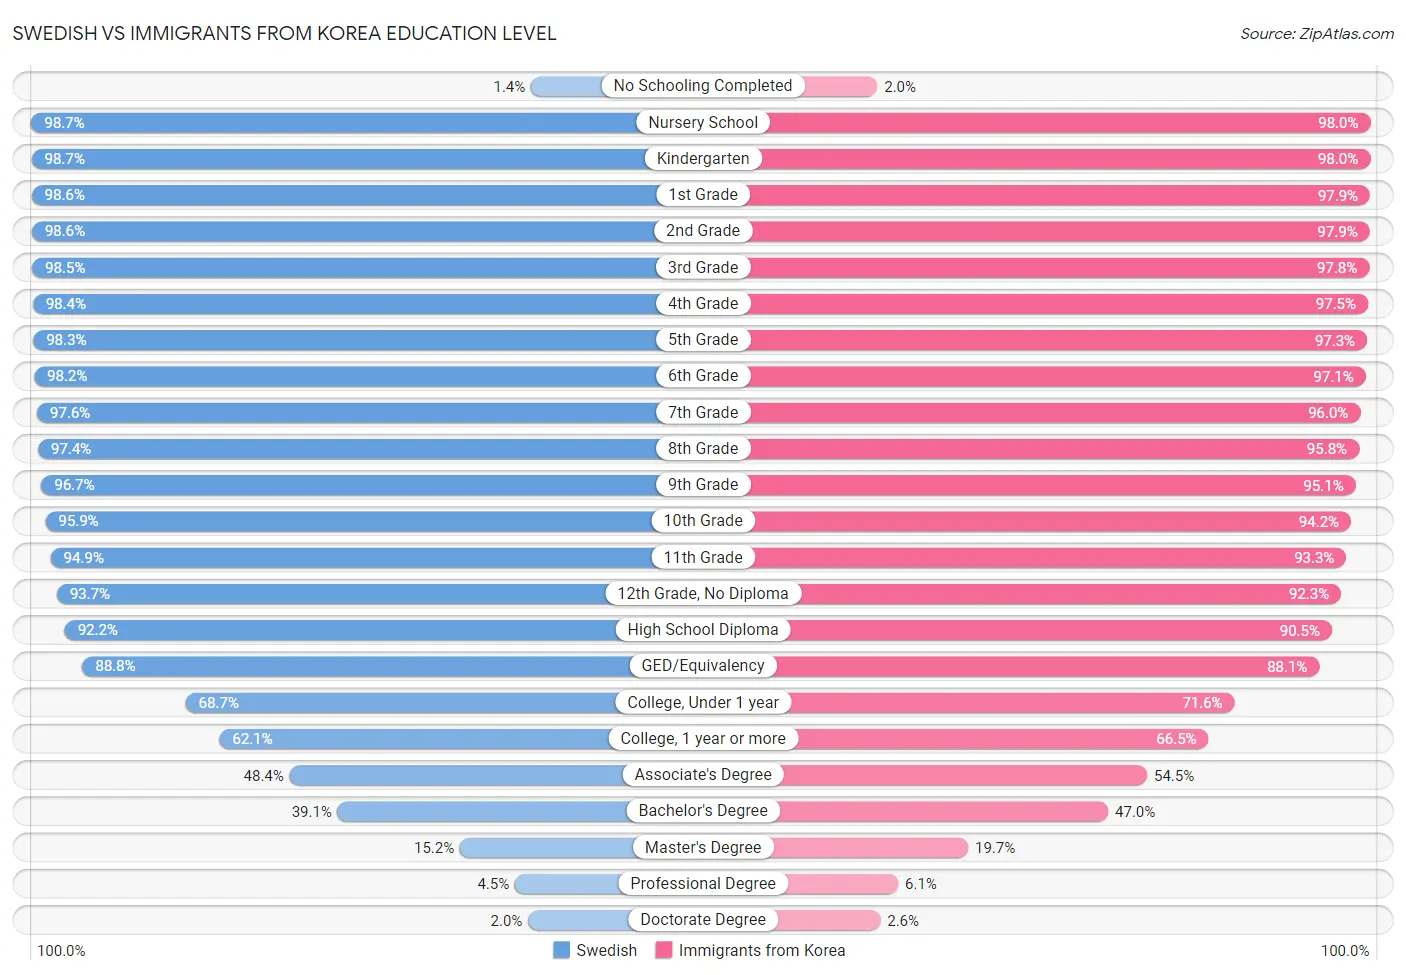 Swedish vs Immigrants from Korea Education Level